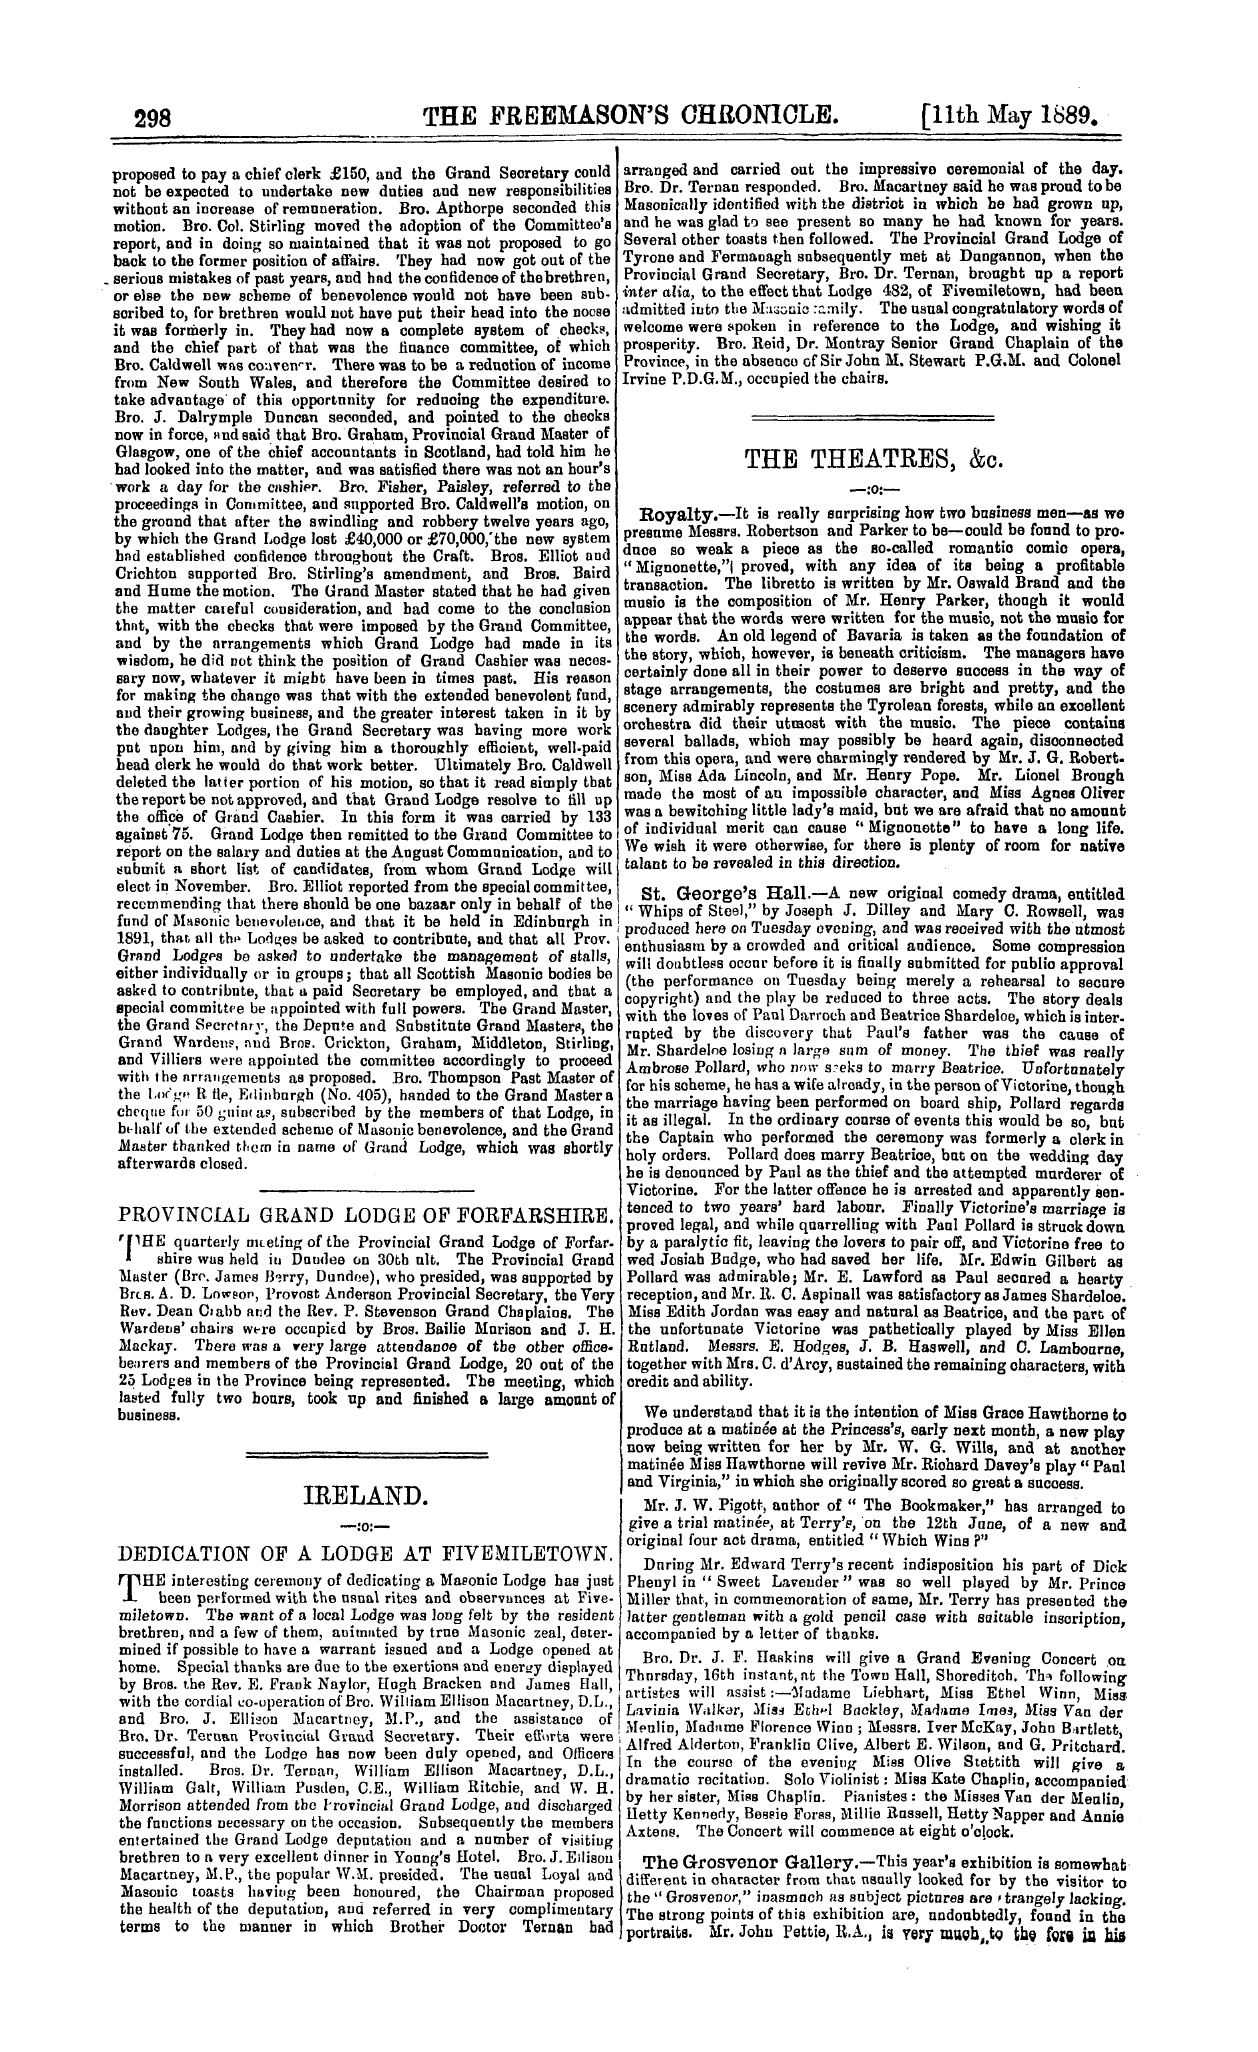 The Freemason's Chronicle: 1889-05-11 - Ireland.